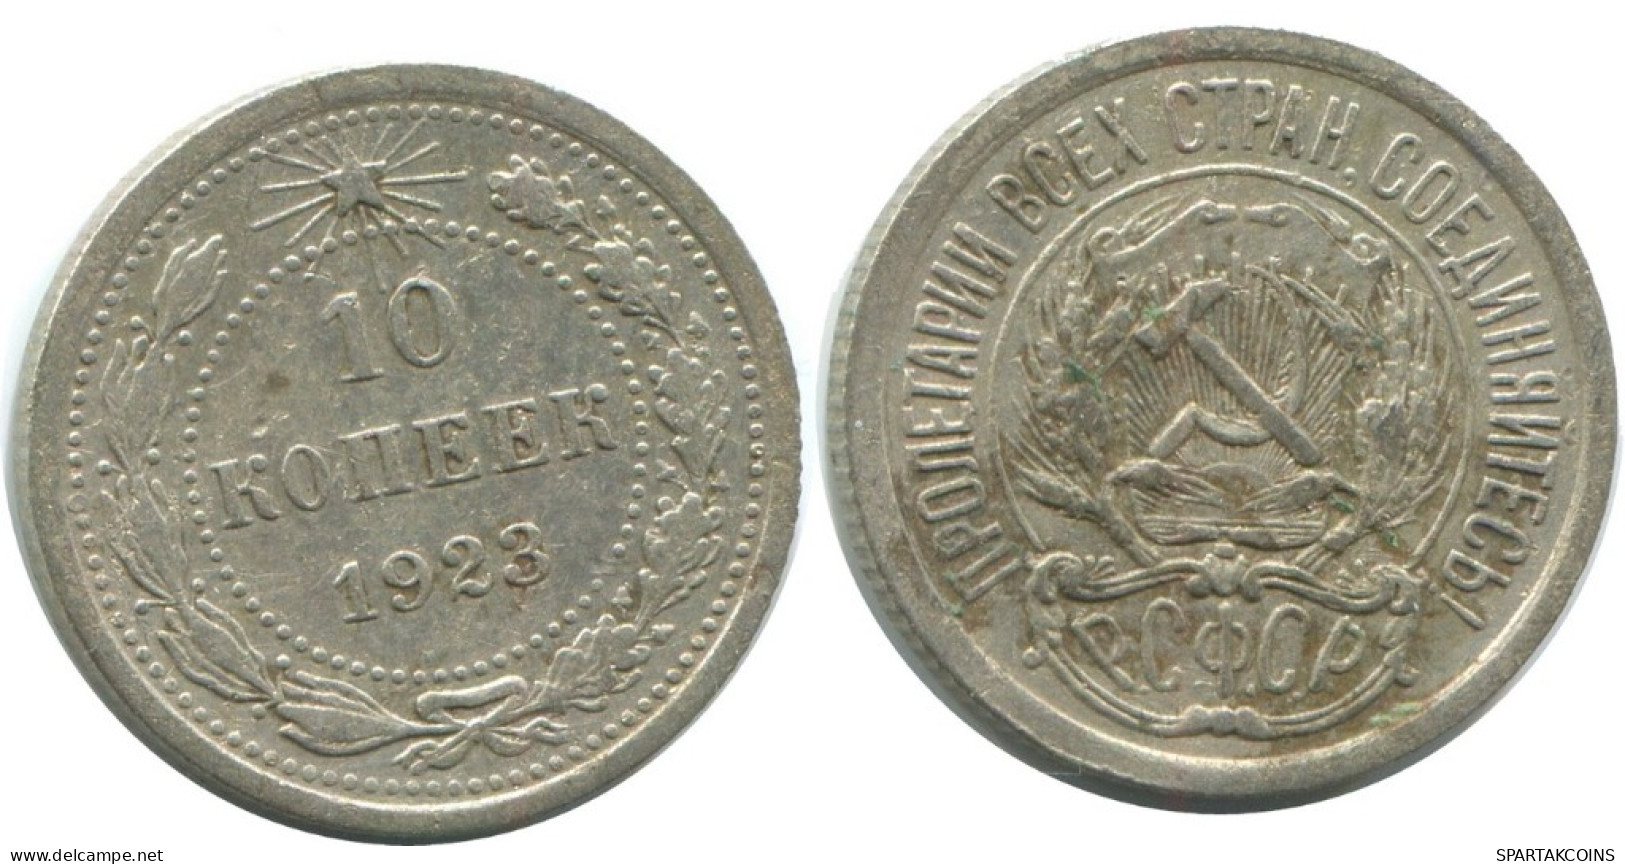 10 KOPEKS 1923 RUSSIA RSFSR SILVER Coin HIGH GRADE #AE931.4.U.A - Russia